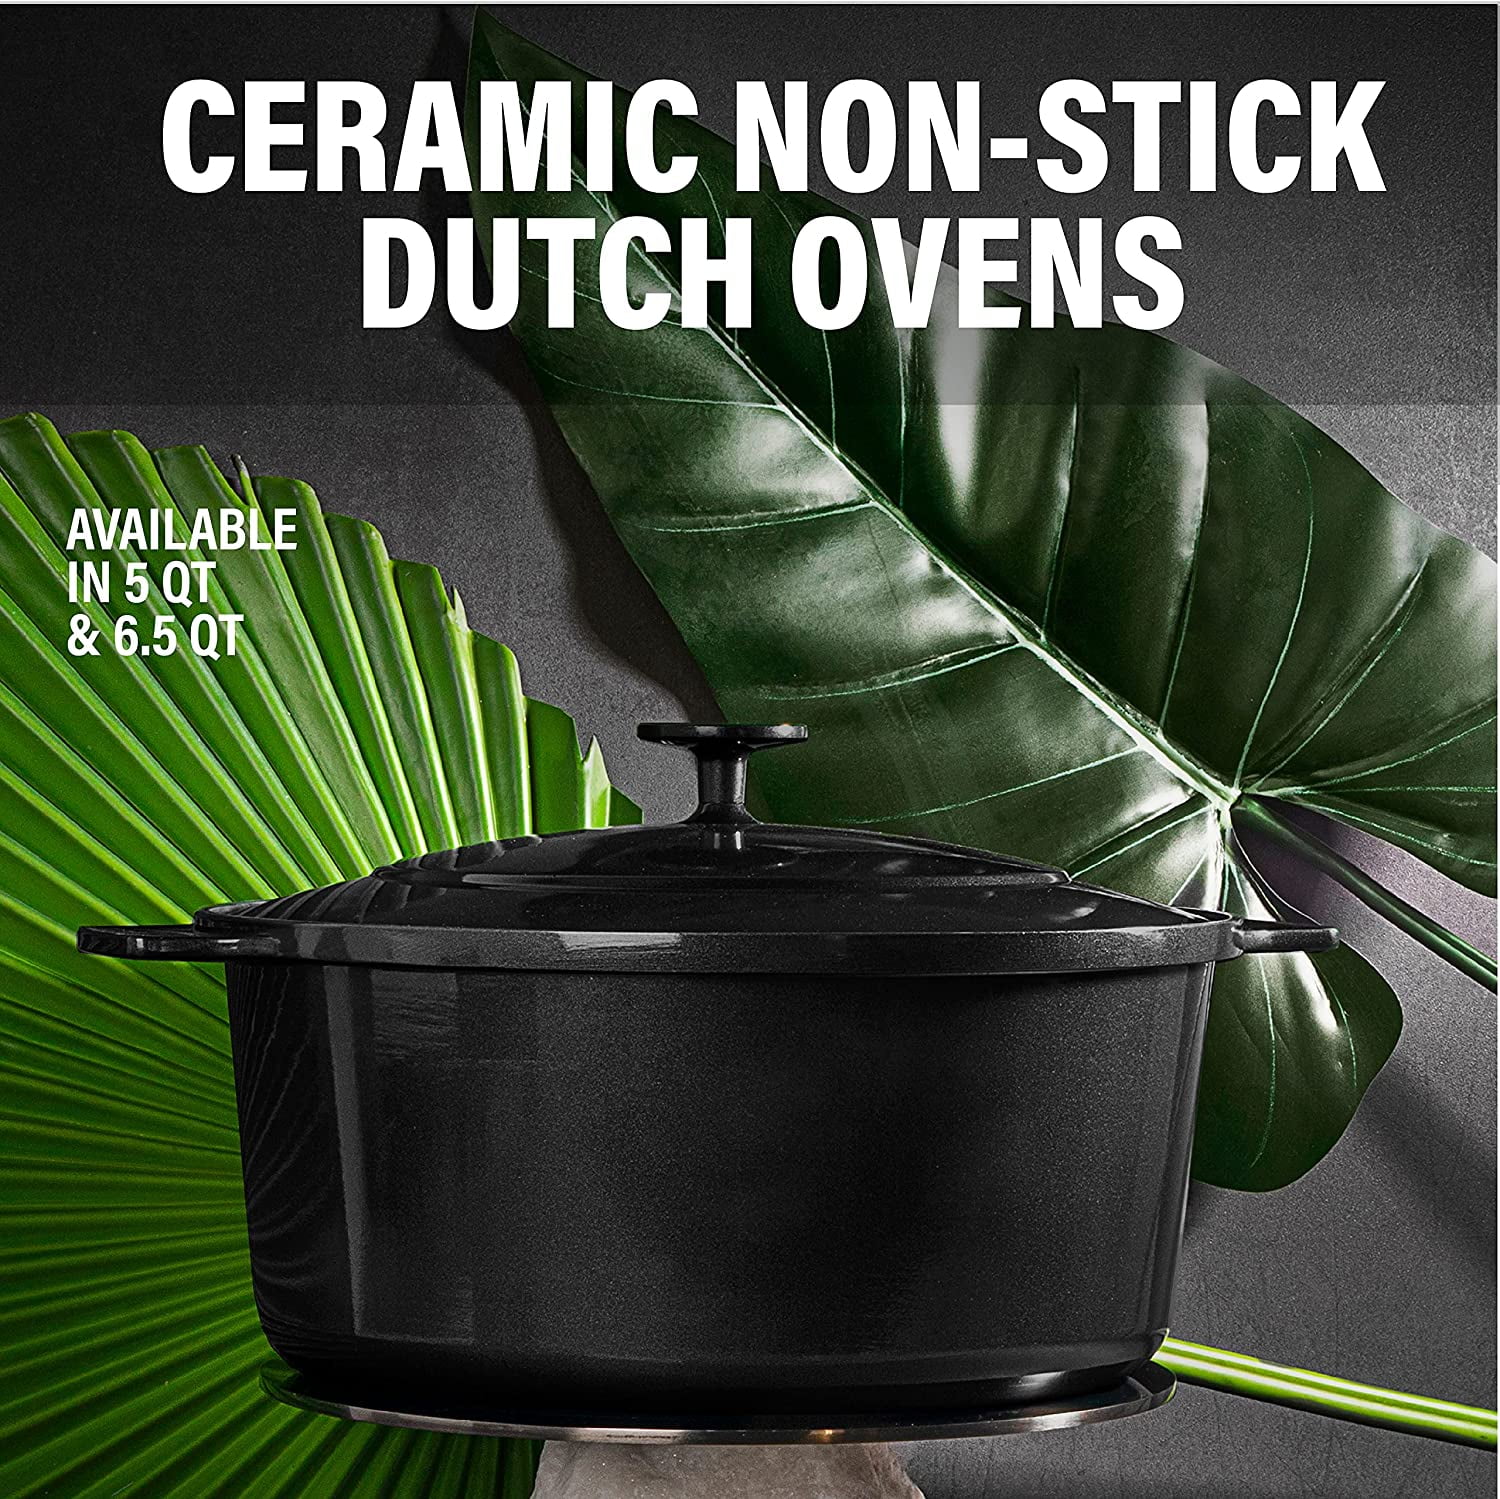 GraniteStone 5 qt. Nonstick Dutch Oven Pot with Self-Basting Lid - 20373079